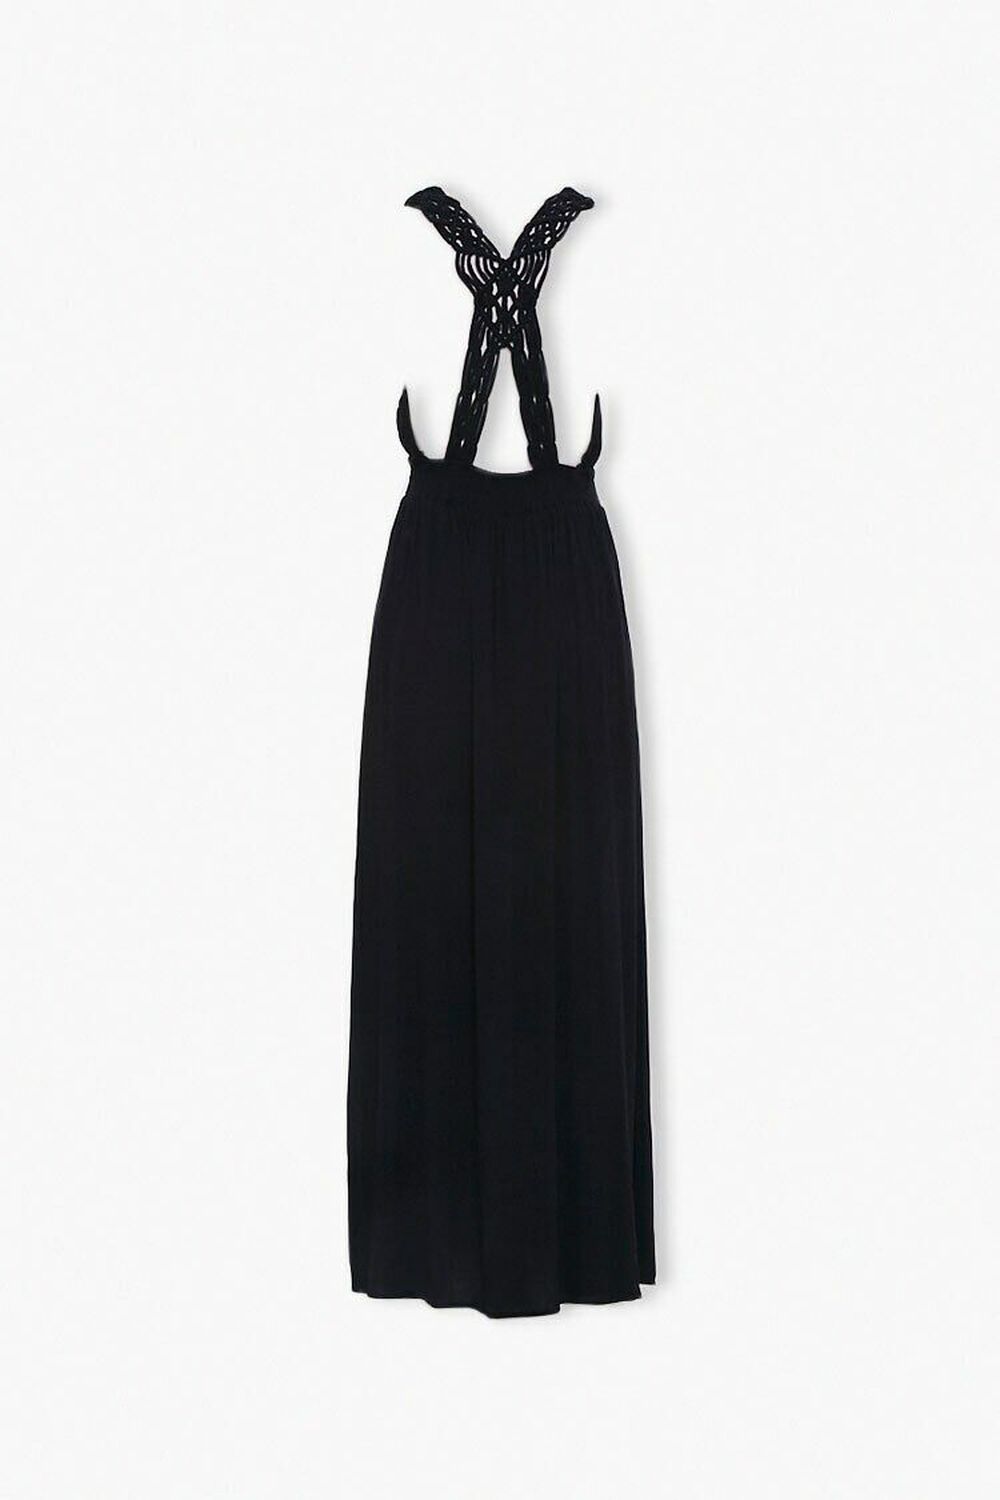 BLACK Macrame Maxi Dress, image 3